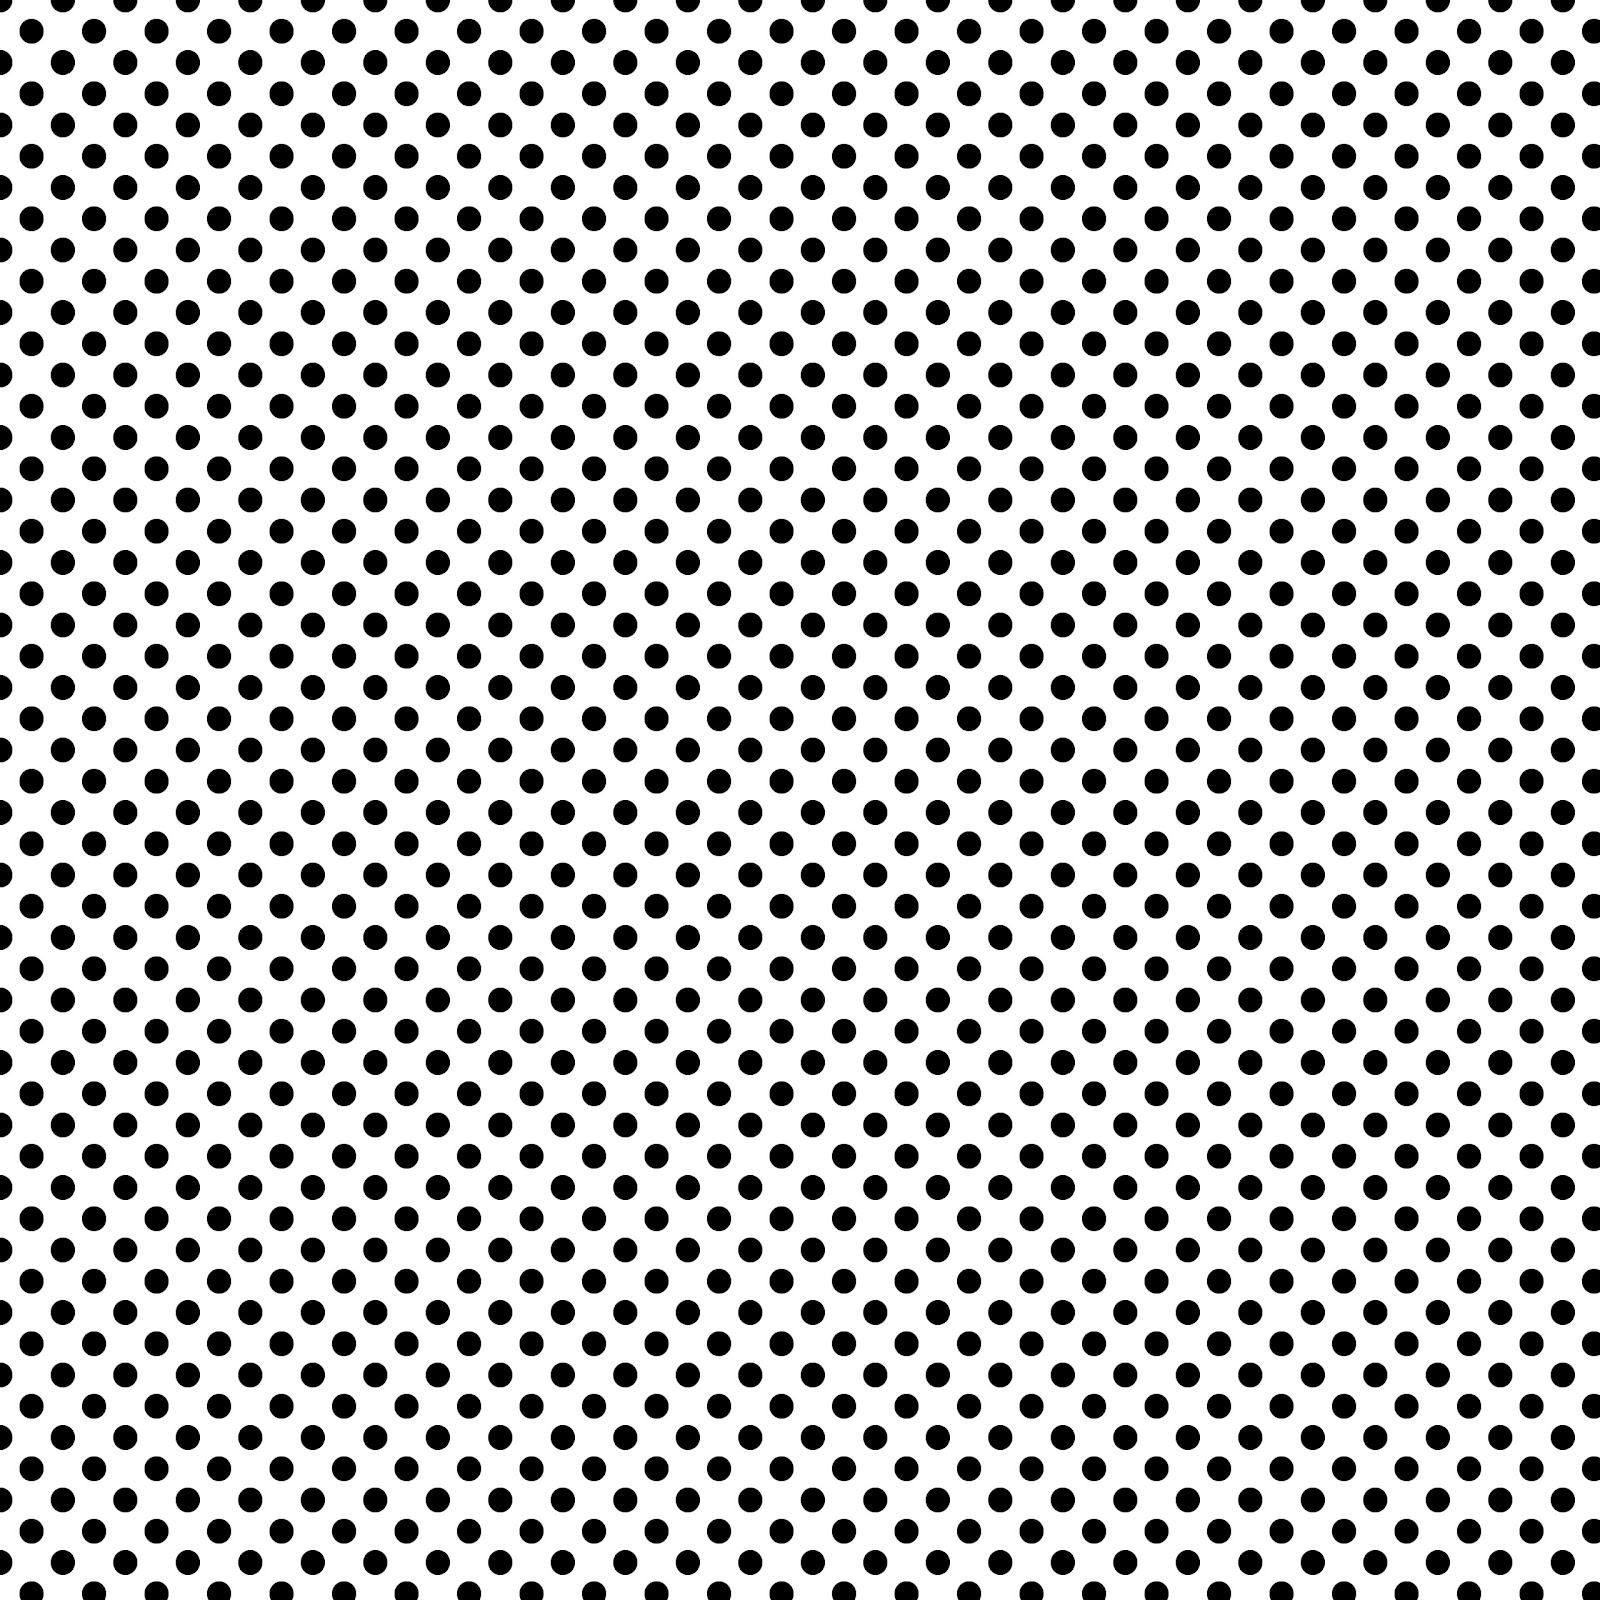 Black And White Polka Dot Wallpaper Border Small Dots